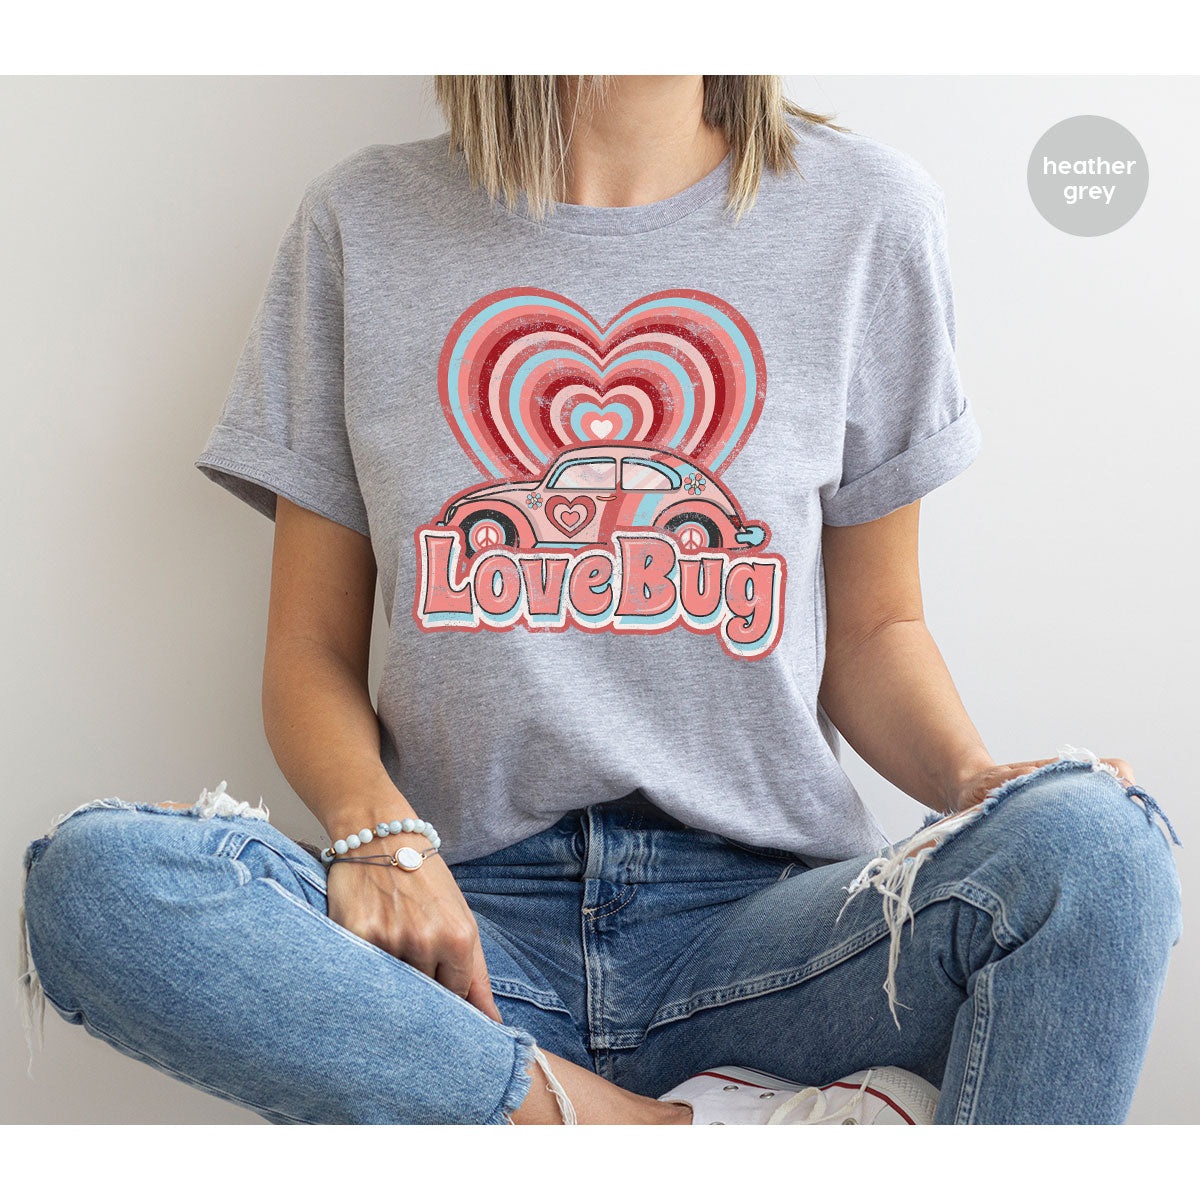 Love Boy T-Shirt, Men's Valentine's Day Special Shirt, Lover Men's Shirt